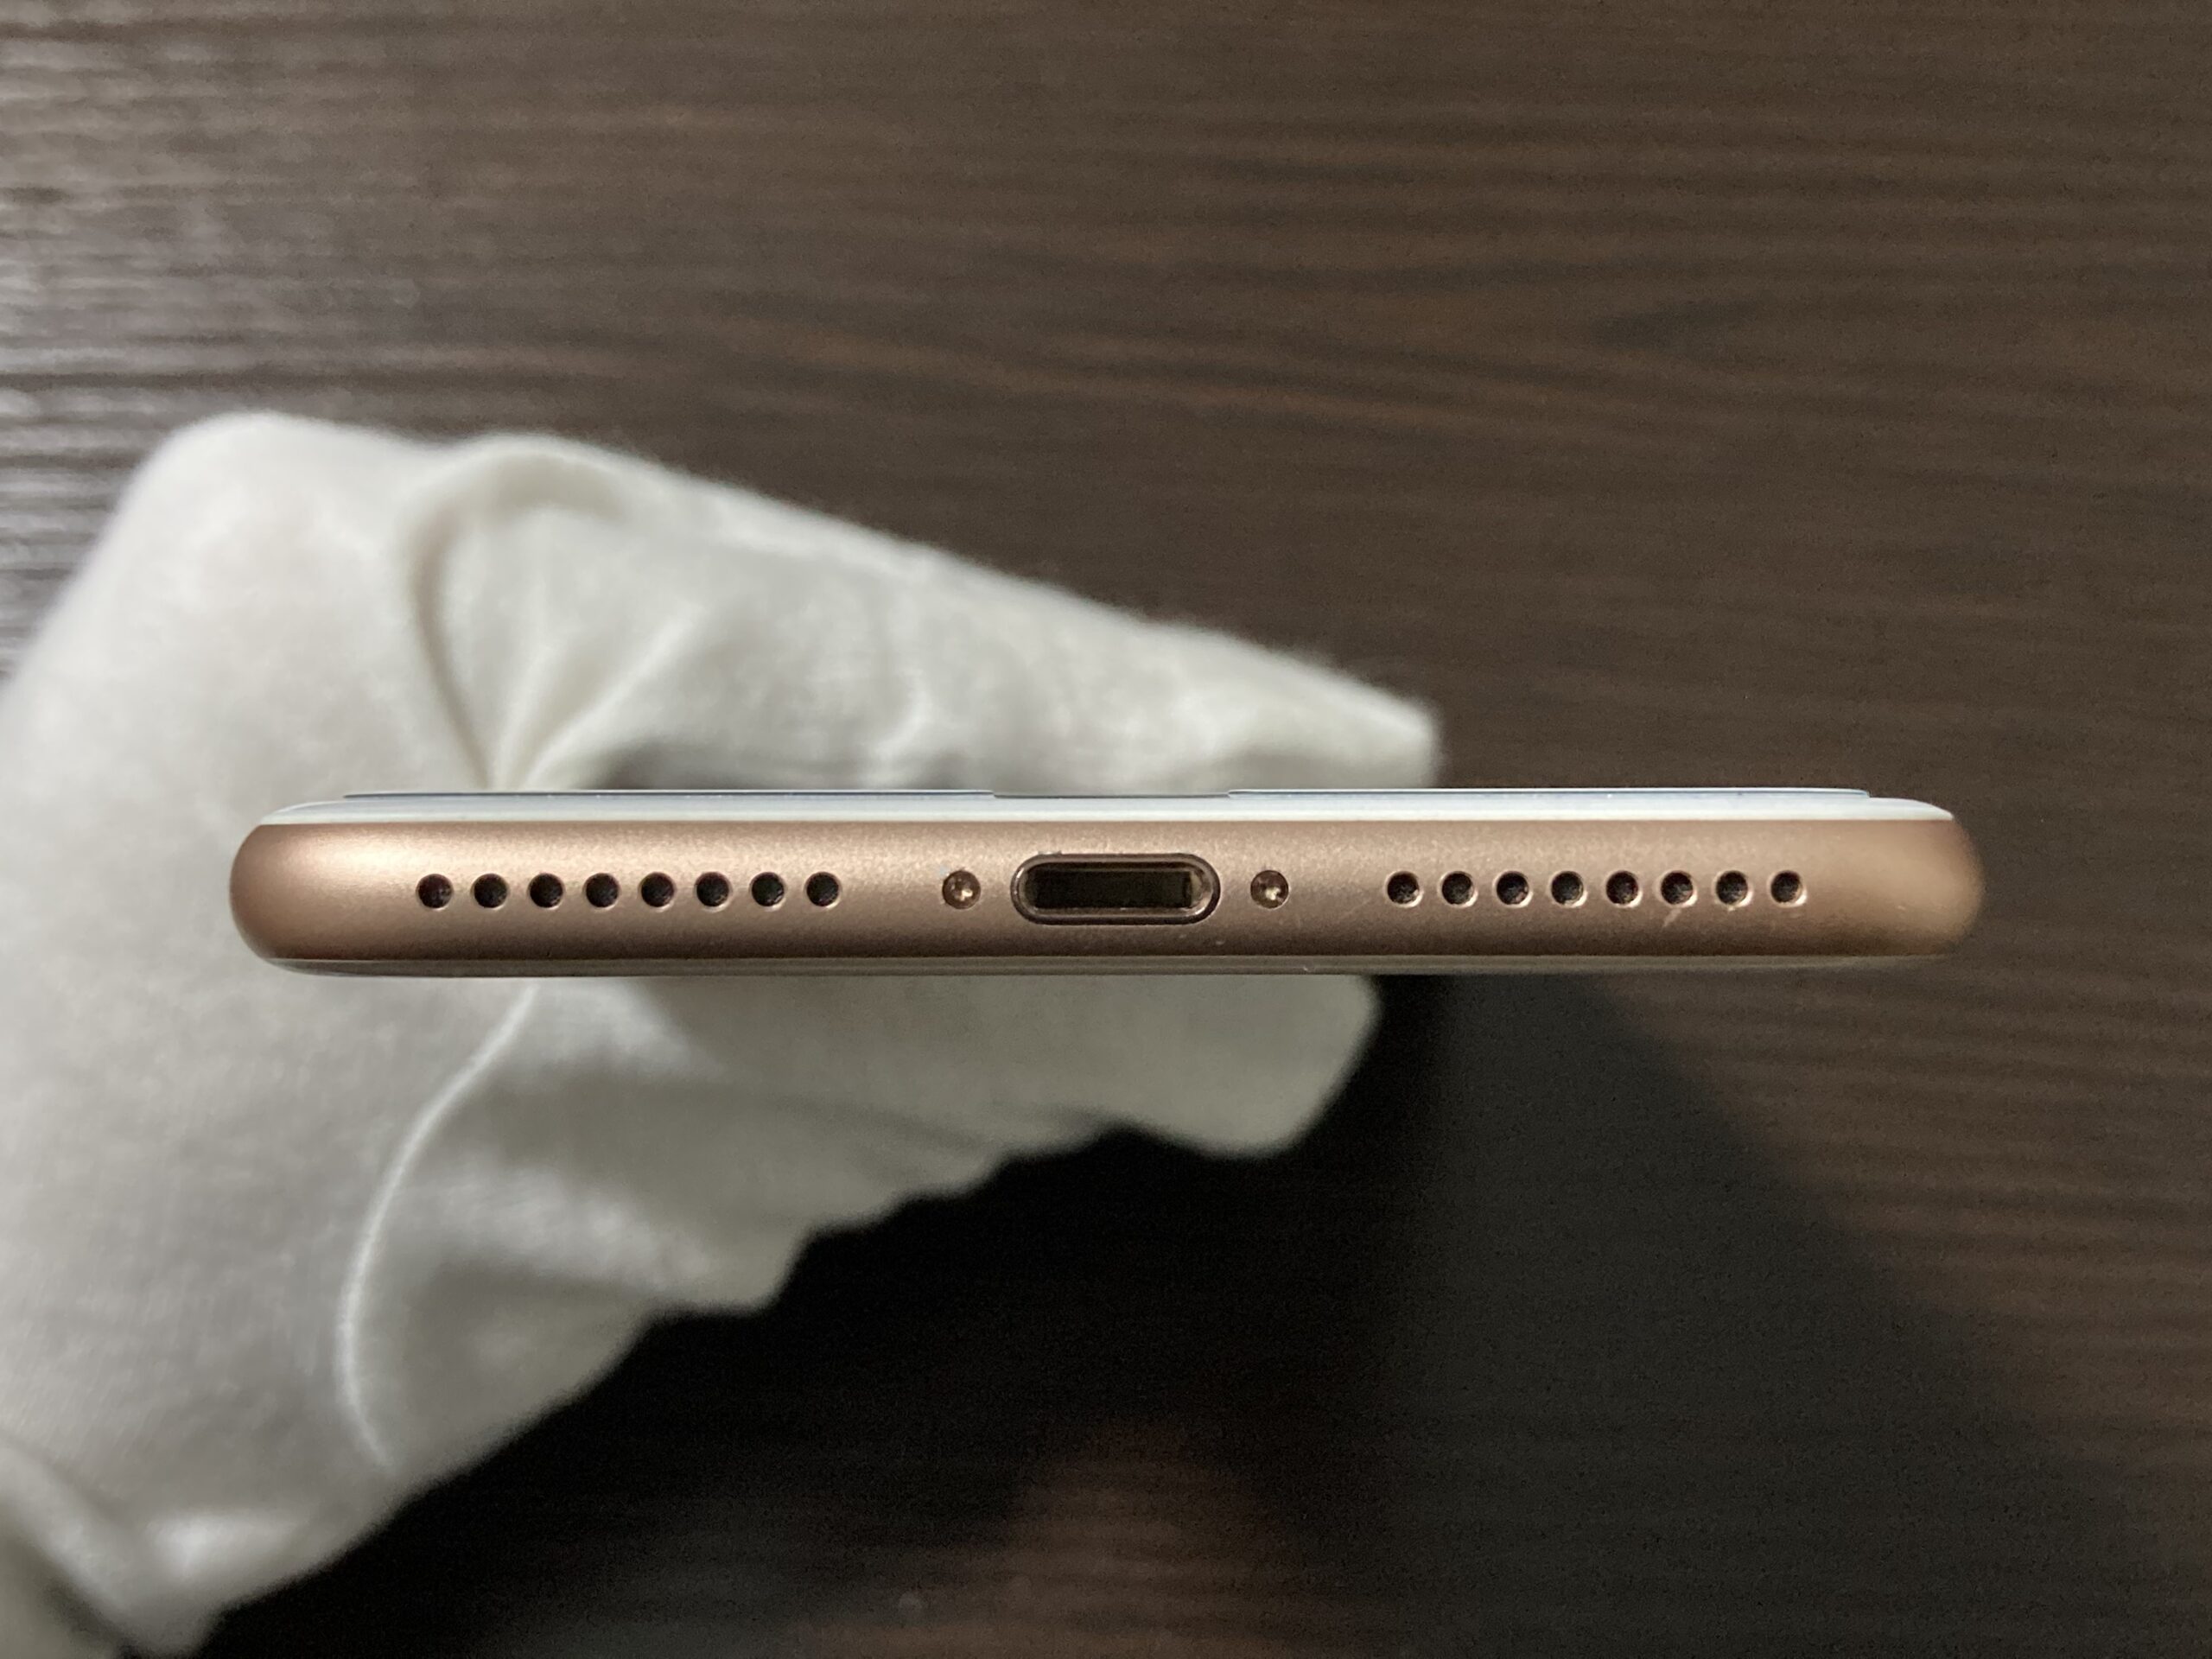 iPhone8Plus 64GB SIMフリー ゴールド | iTerminalオフィシャル